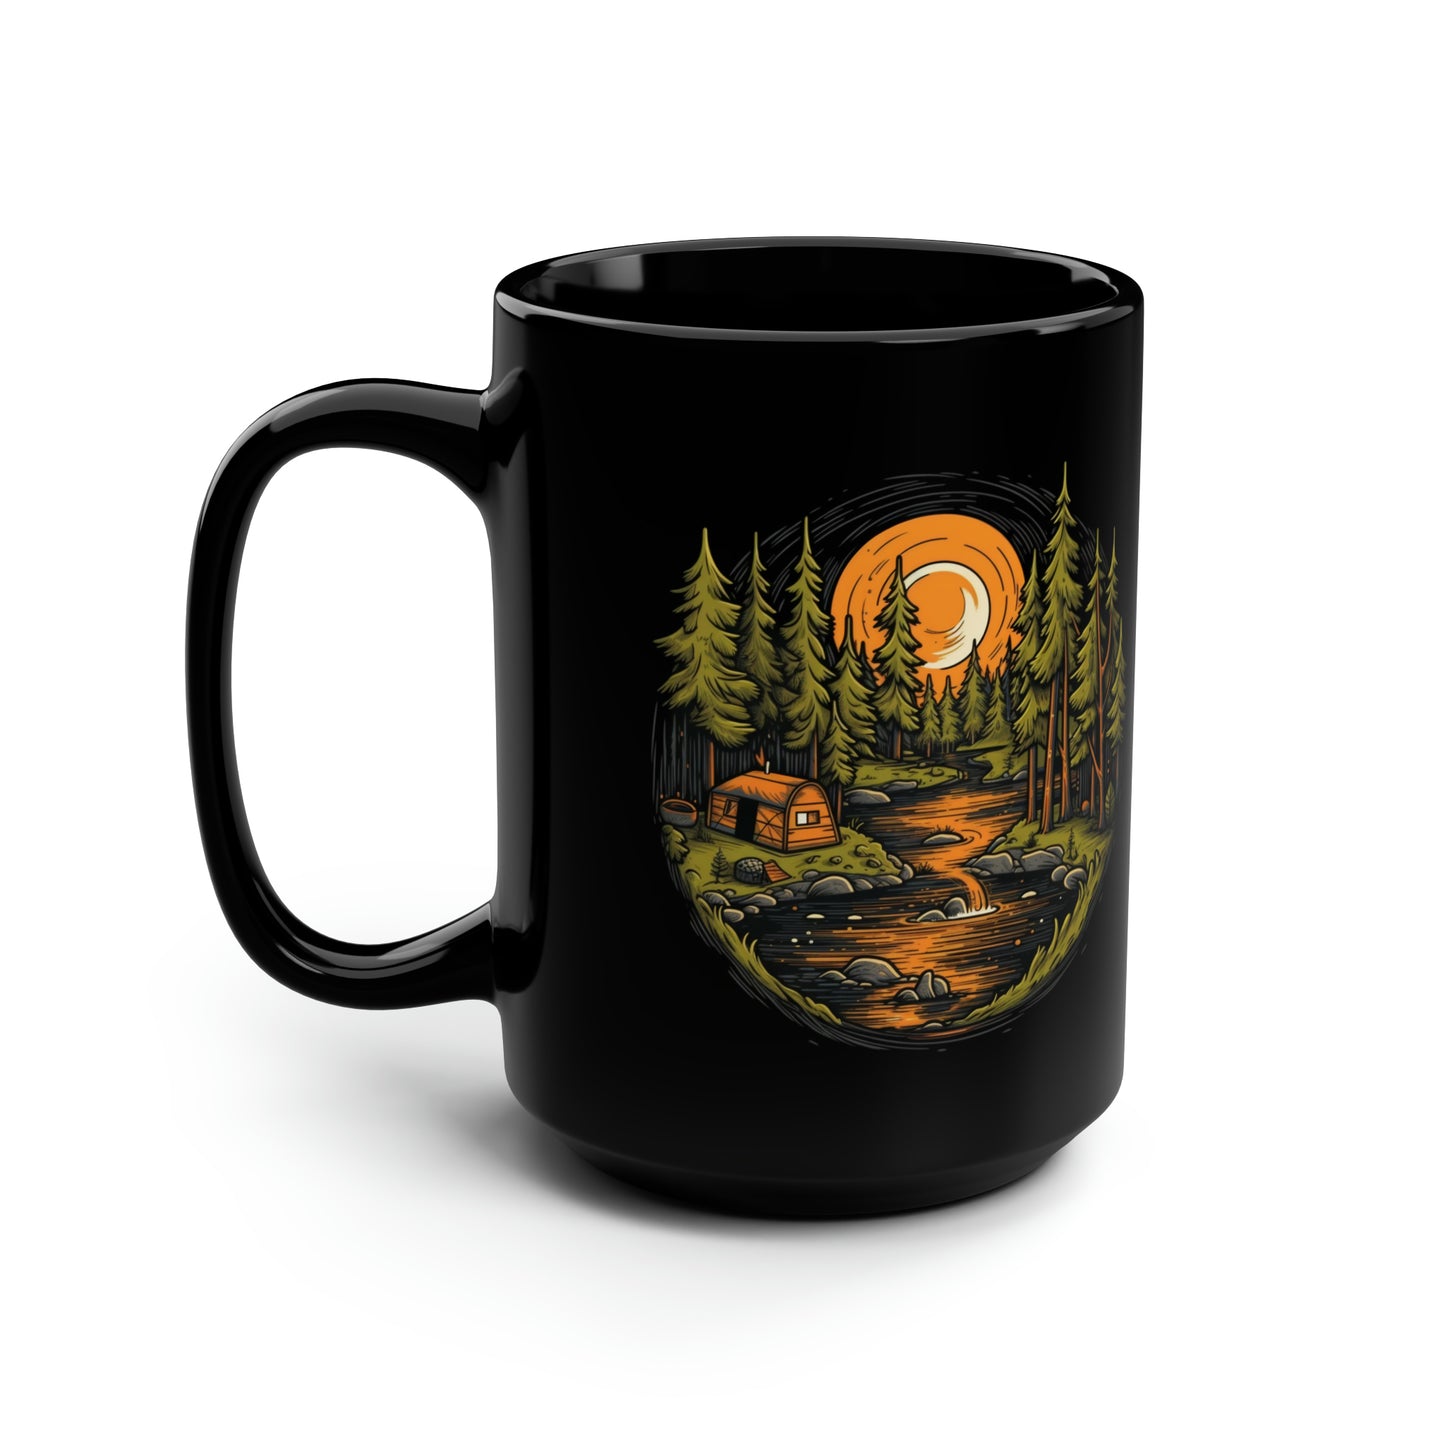 Camping Mug, Campfire Coffee Cup, Tent in Woods by Babbling Brook with Orange Moon Glow, Camp Gift, Ceramic Mug 15oz, Camp Mug, Camp Tea Cup